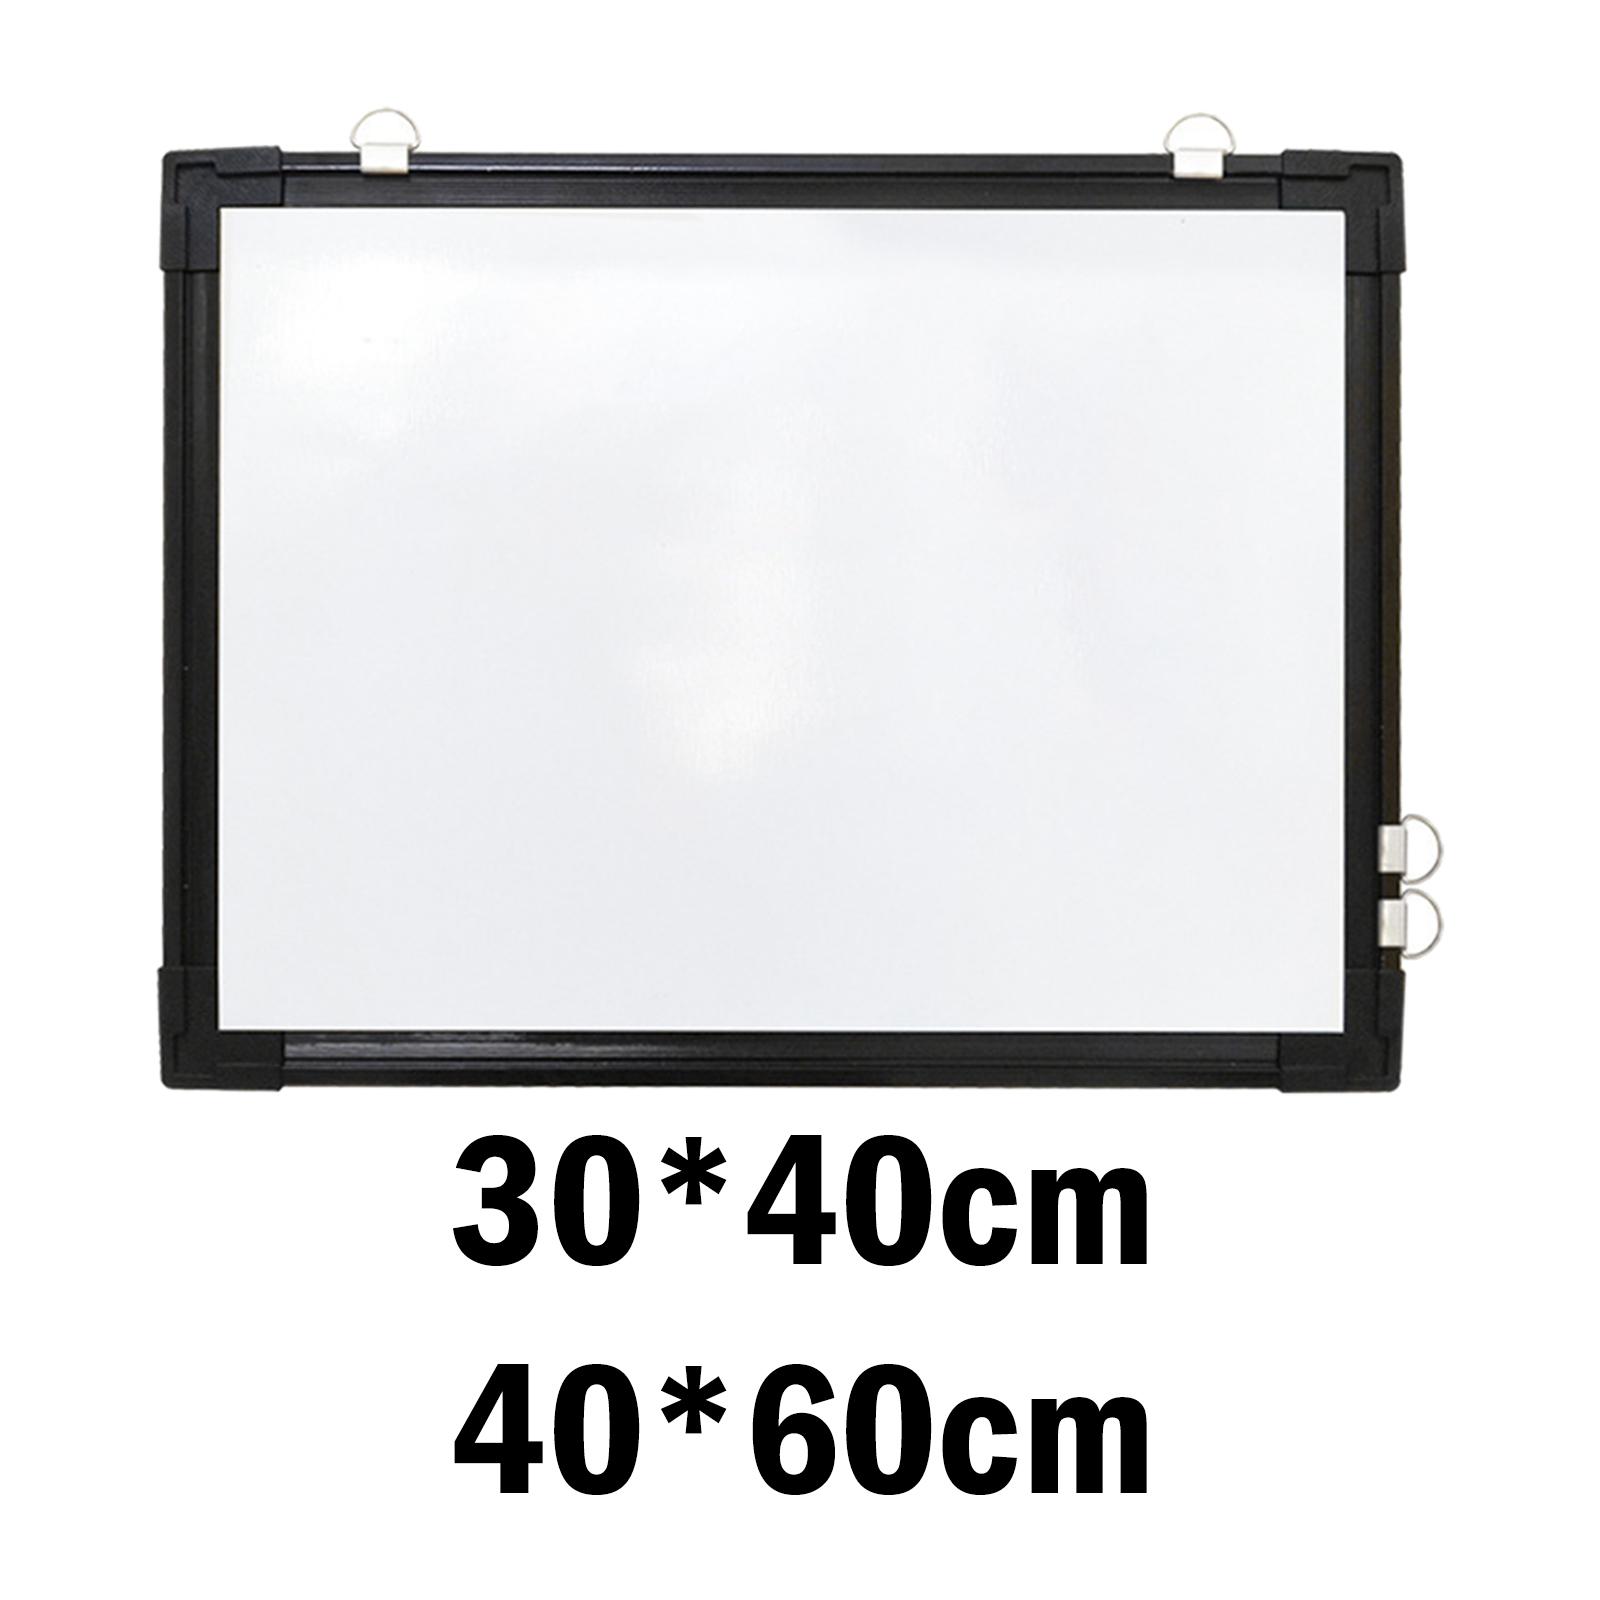 Double Sided Magnetic Whiteboard Aluminium Frame Wall Hanging Dry Erase White